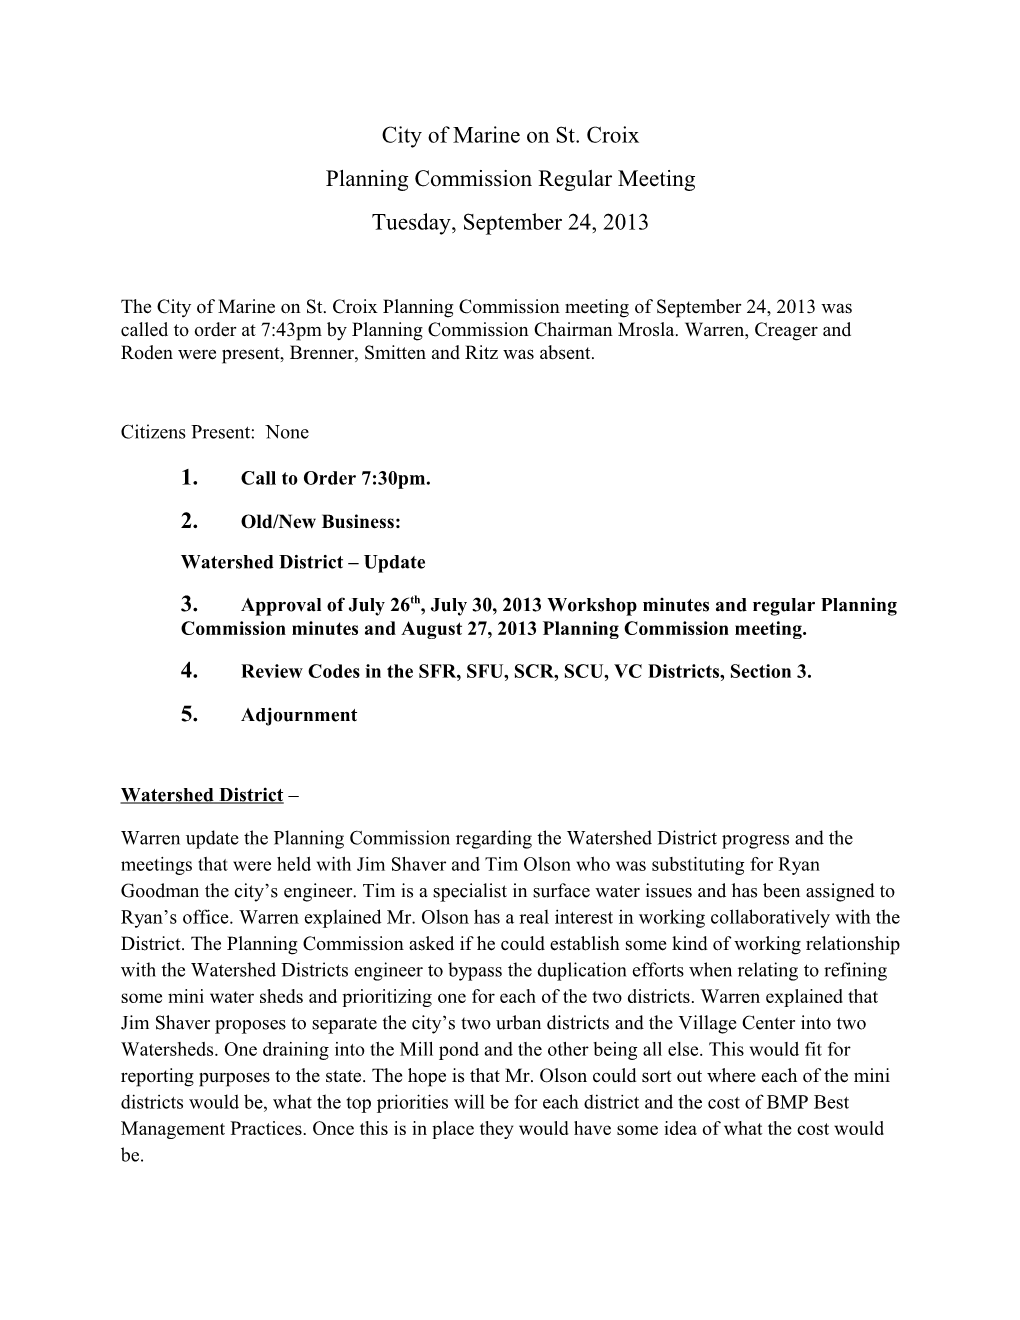 Planning Commissionregular Meeting